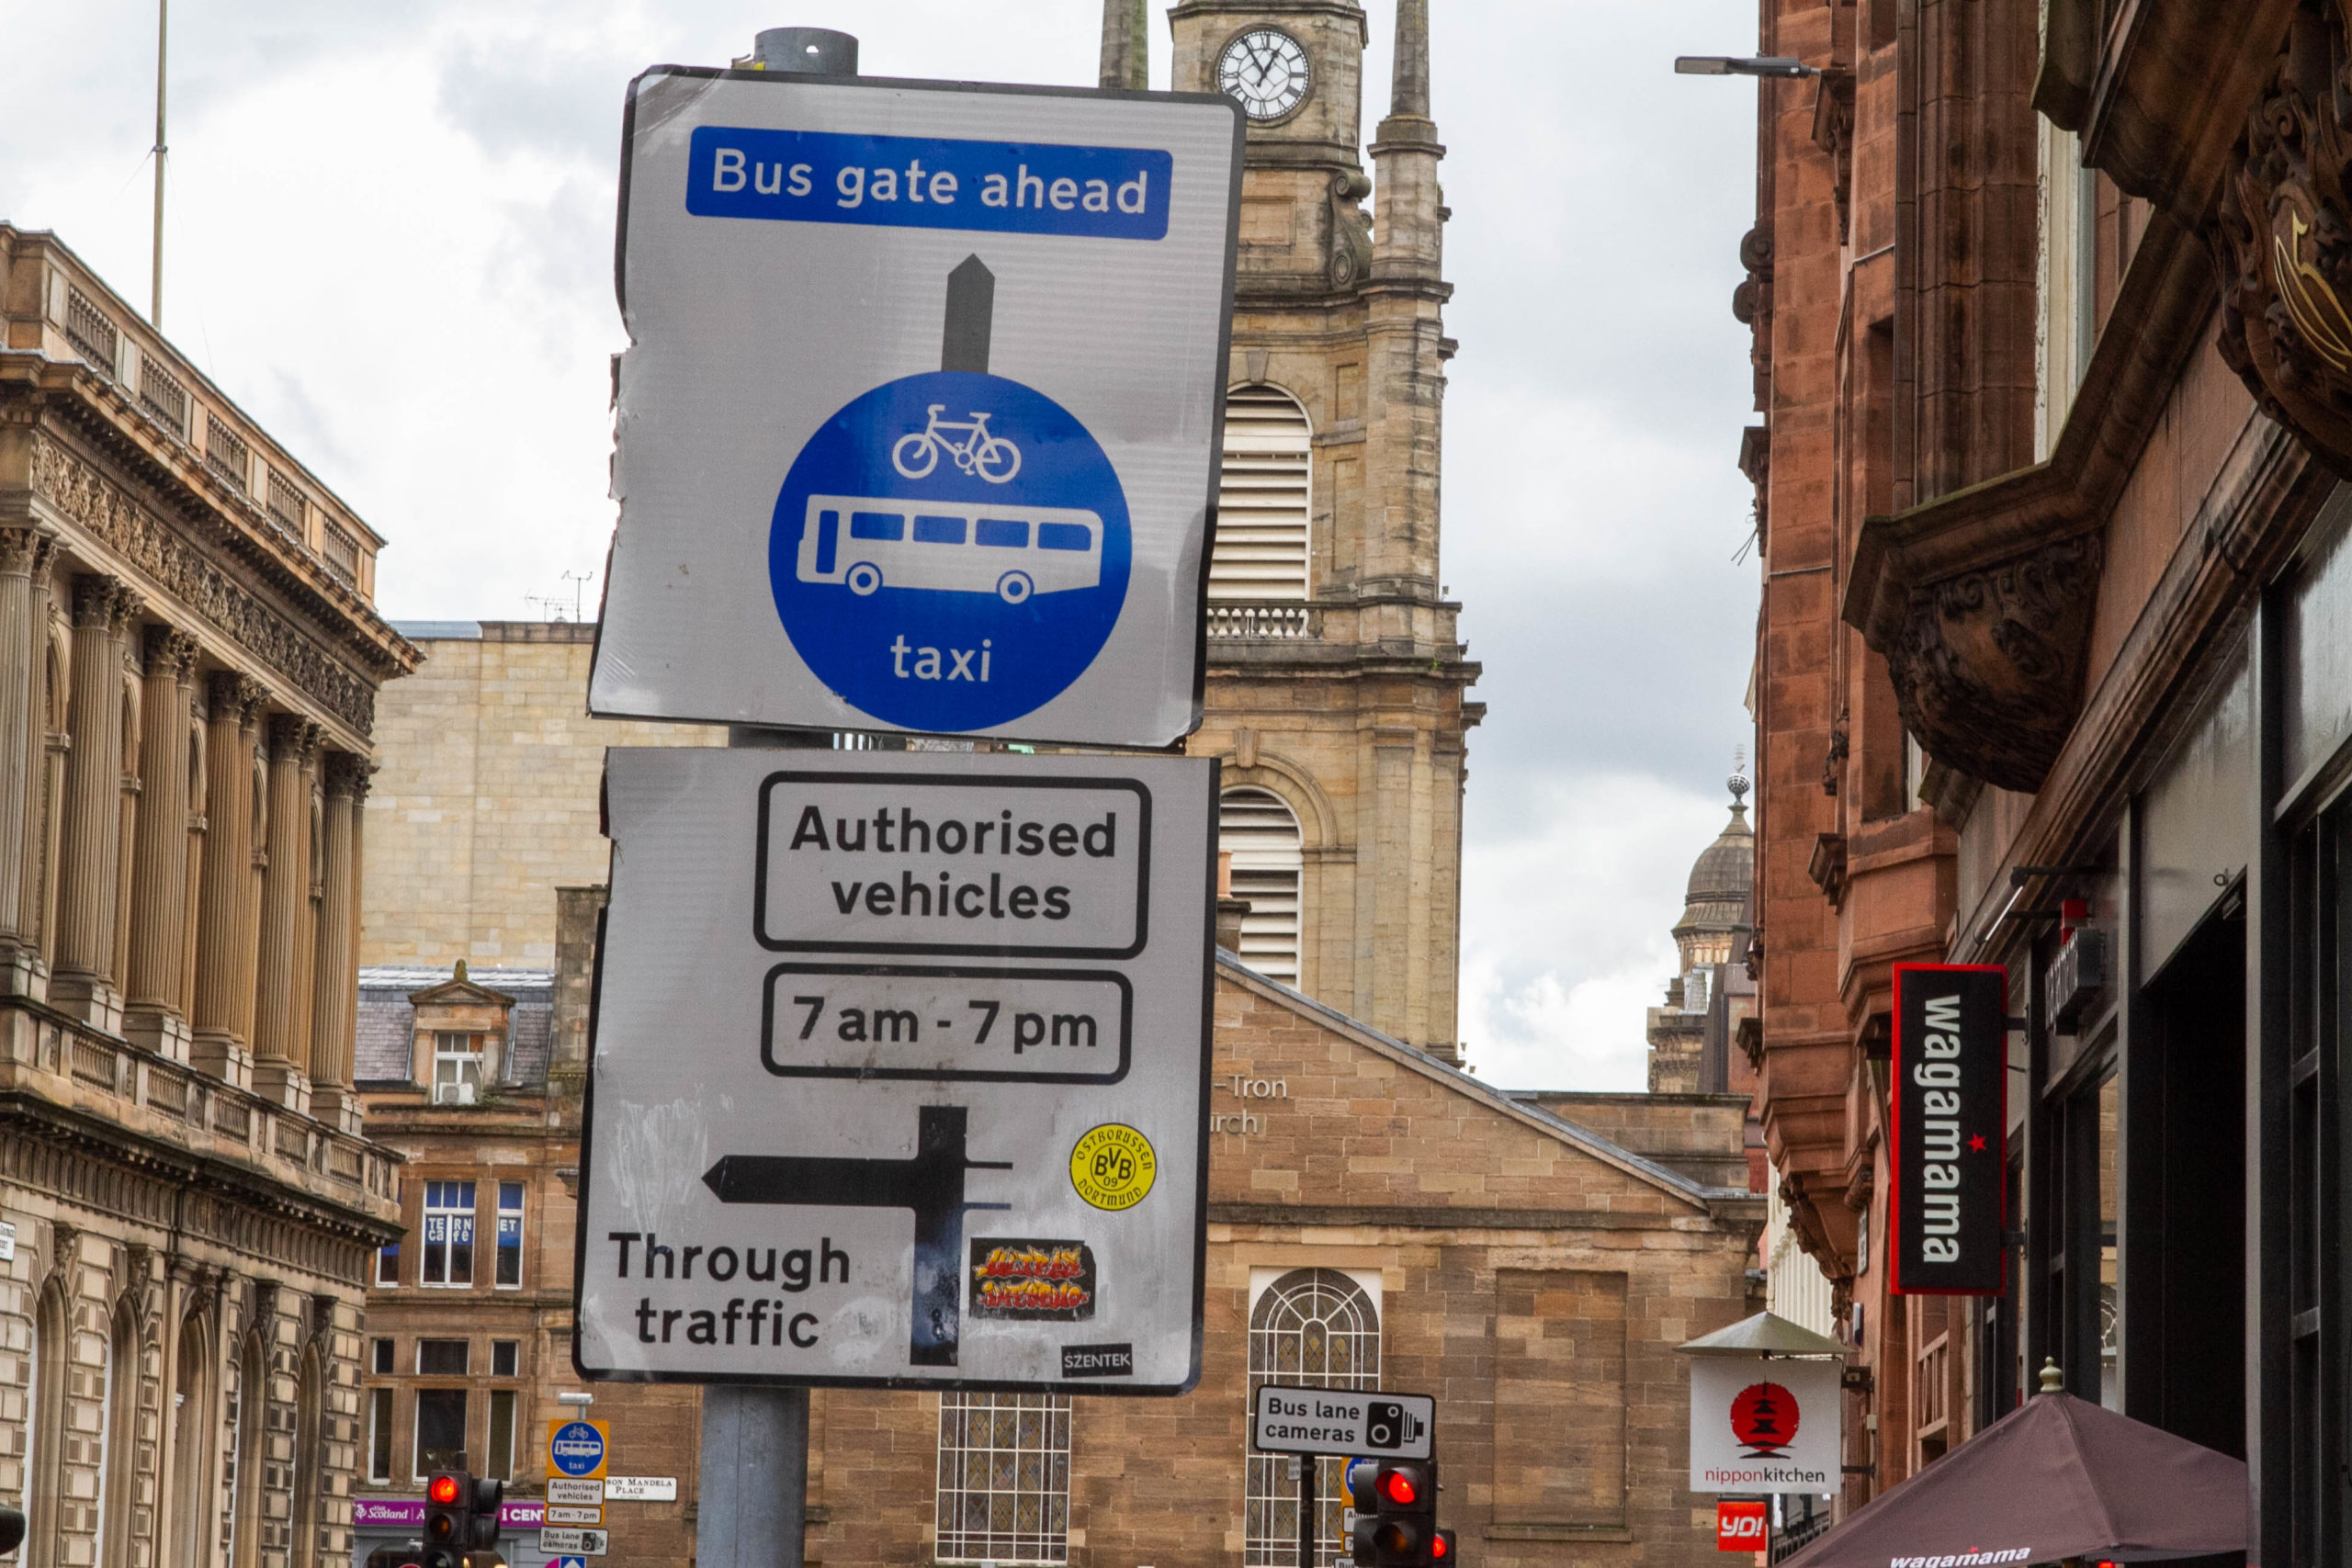 Glasgow Bus lane on West George St, Glasgow.